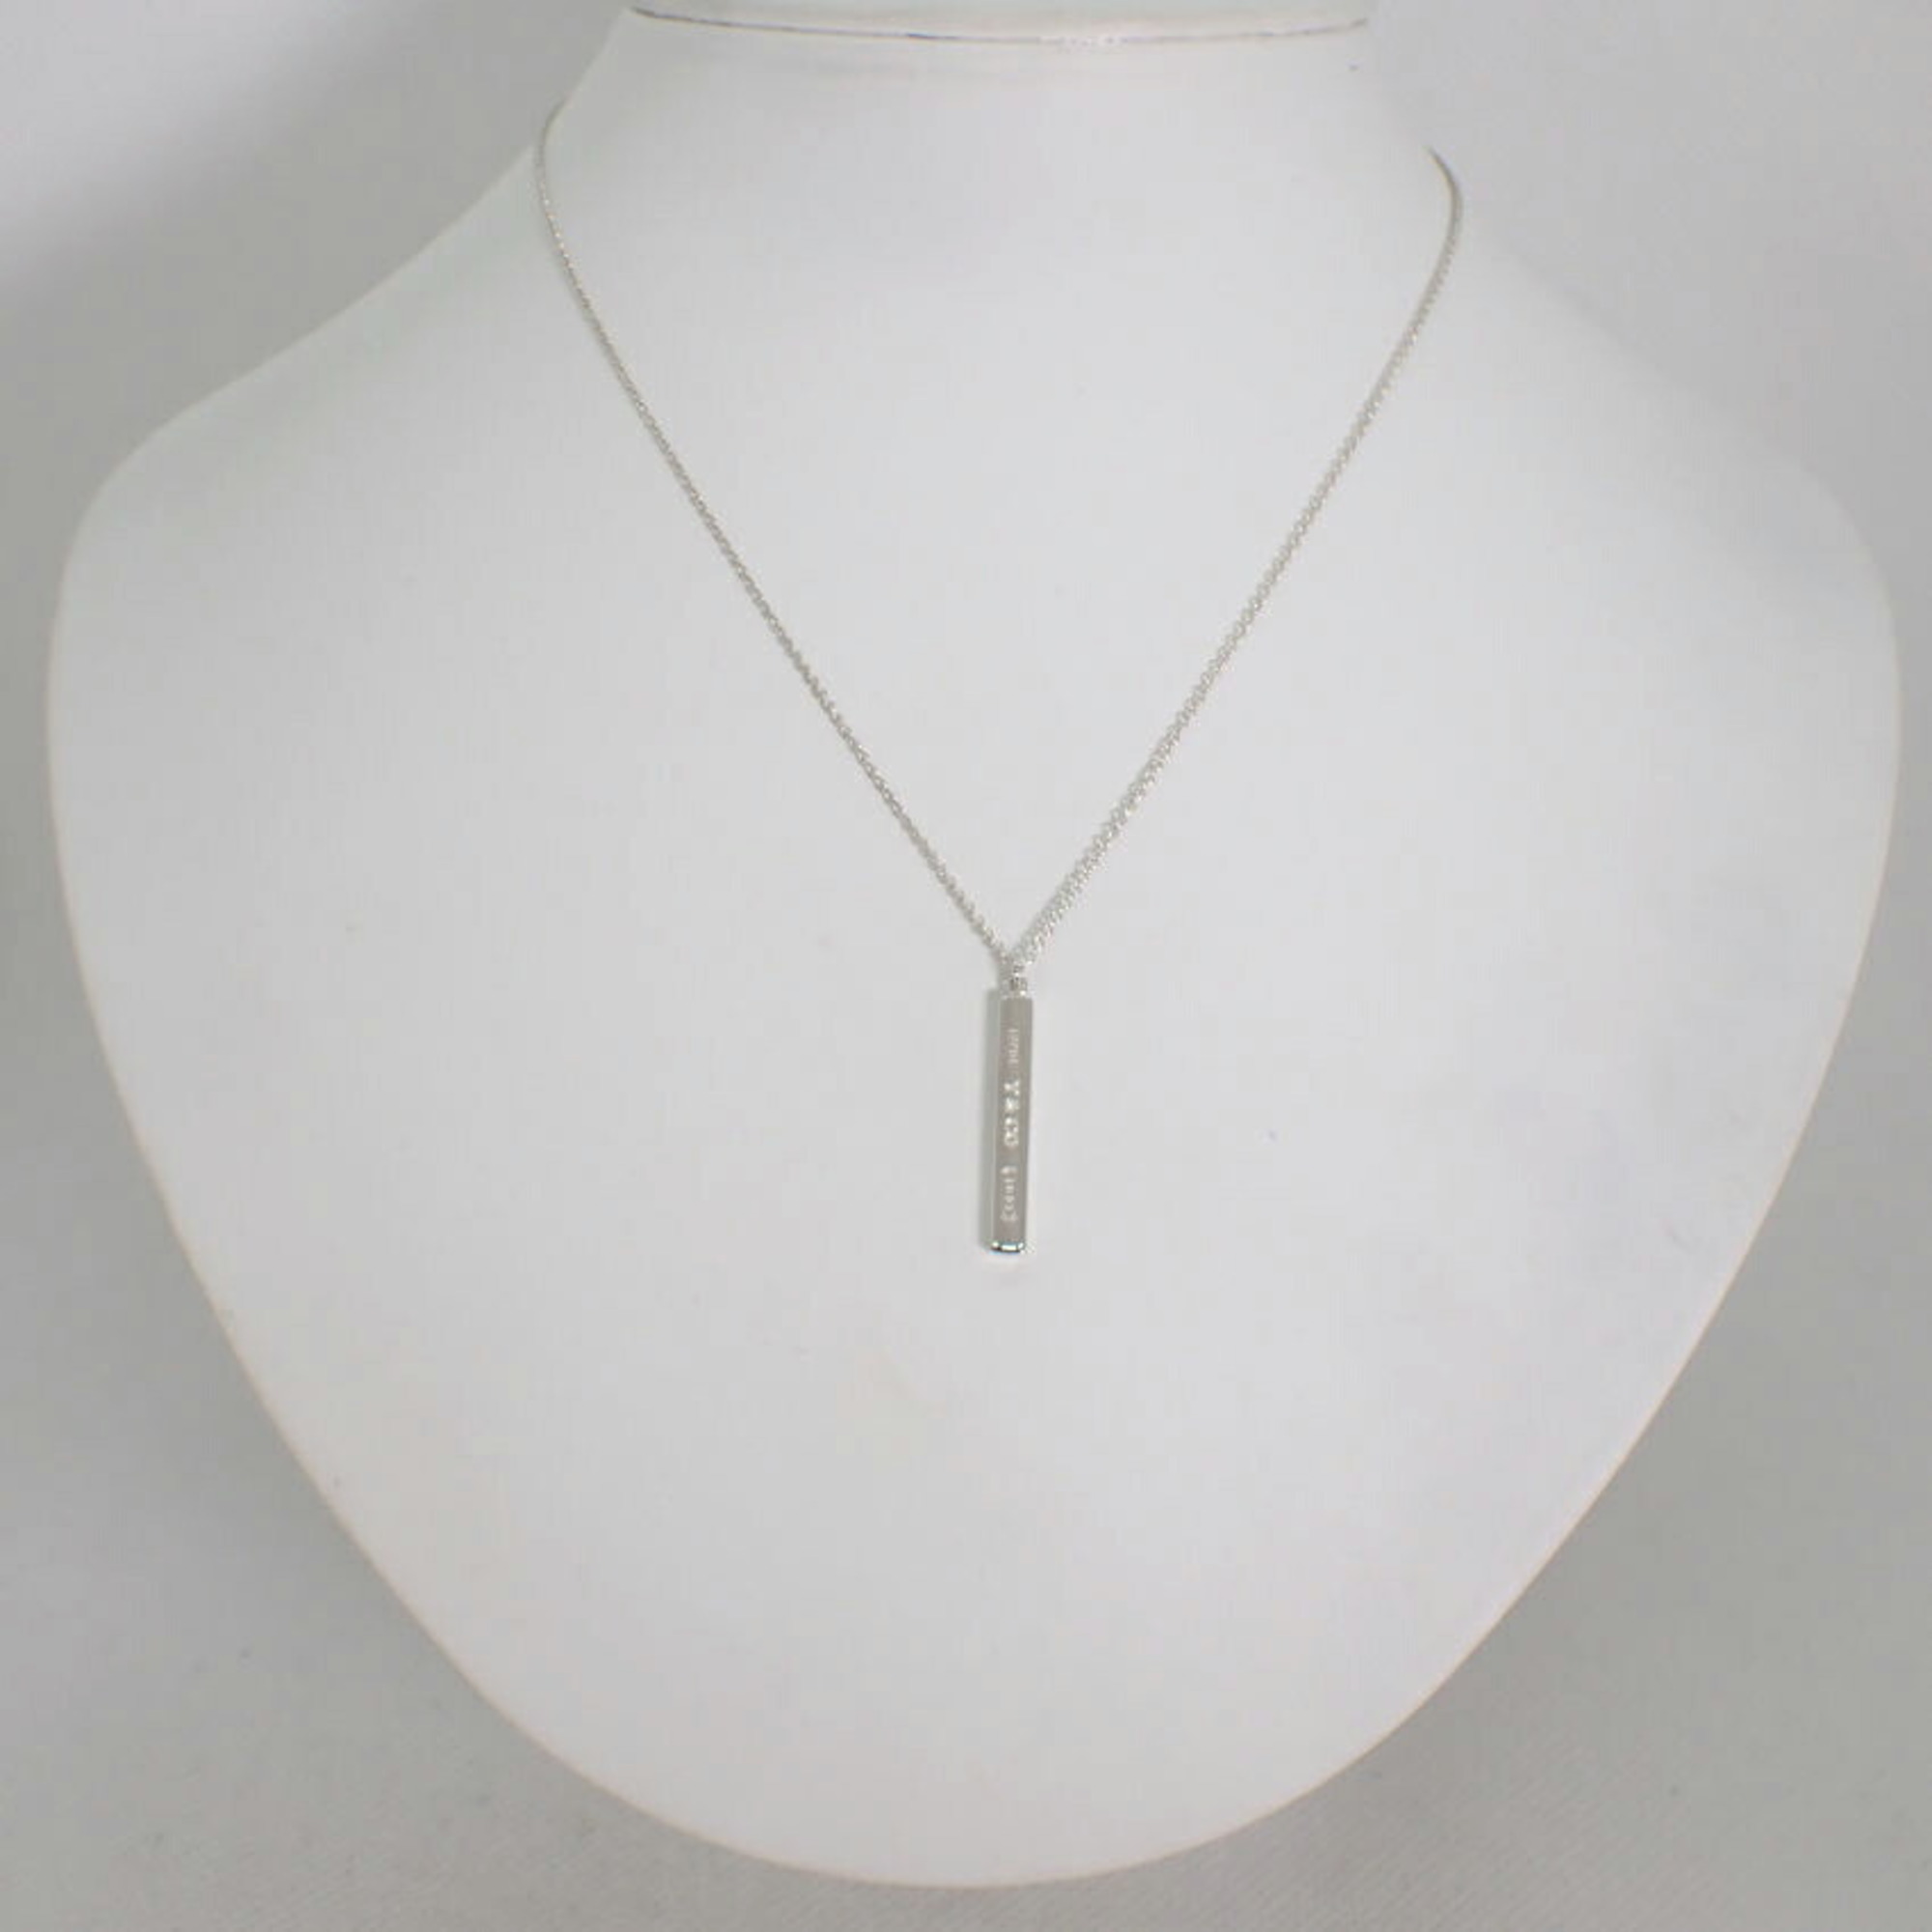 TIFFANY SV925 1837 bar pendant necklace